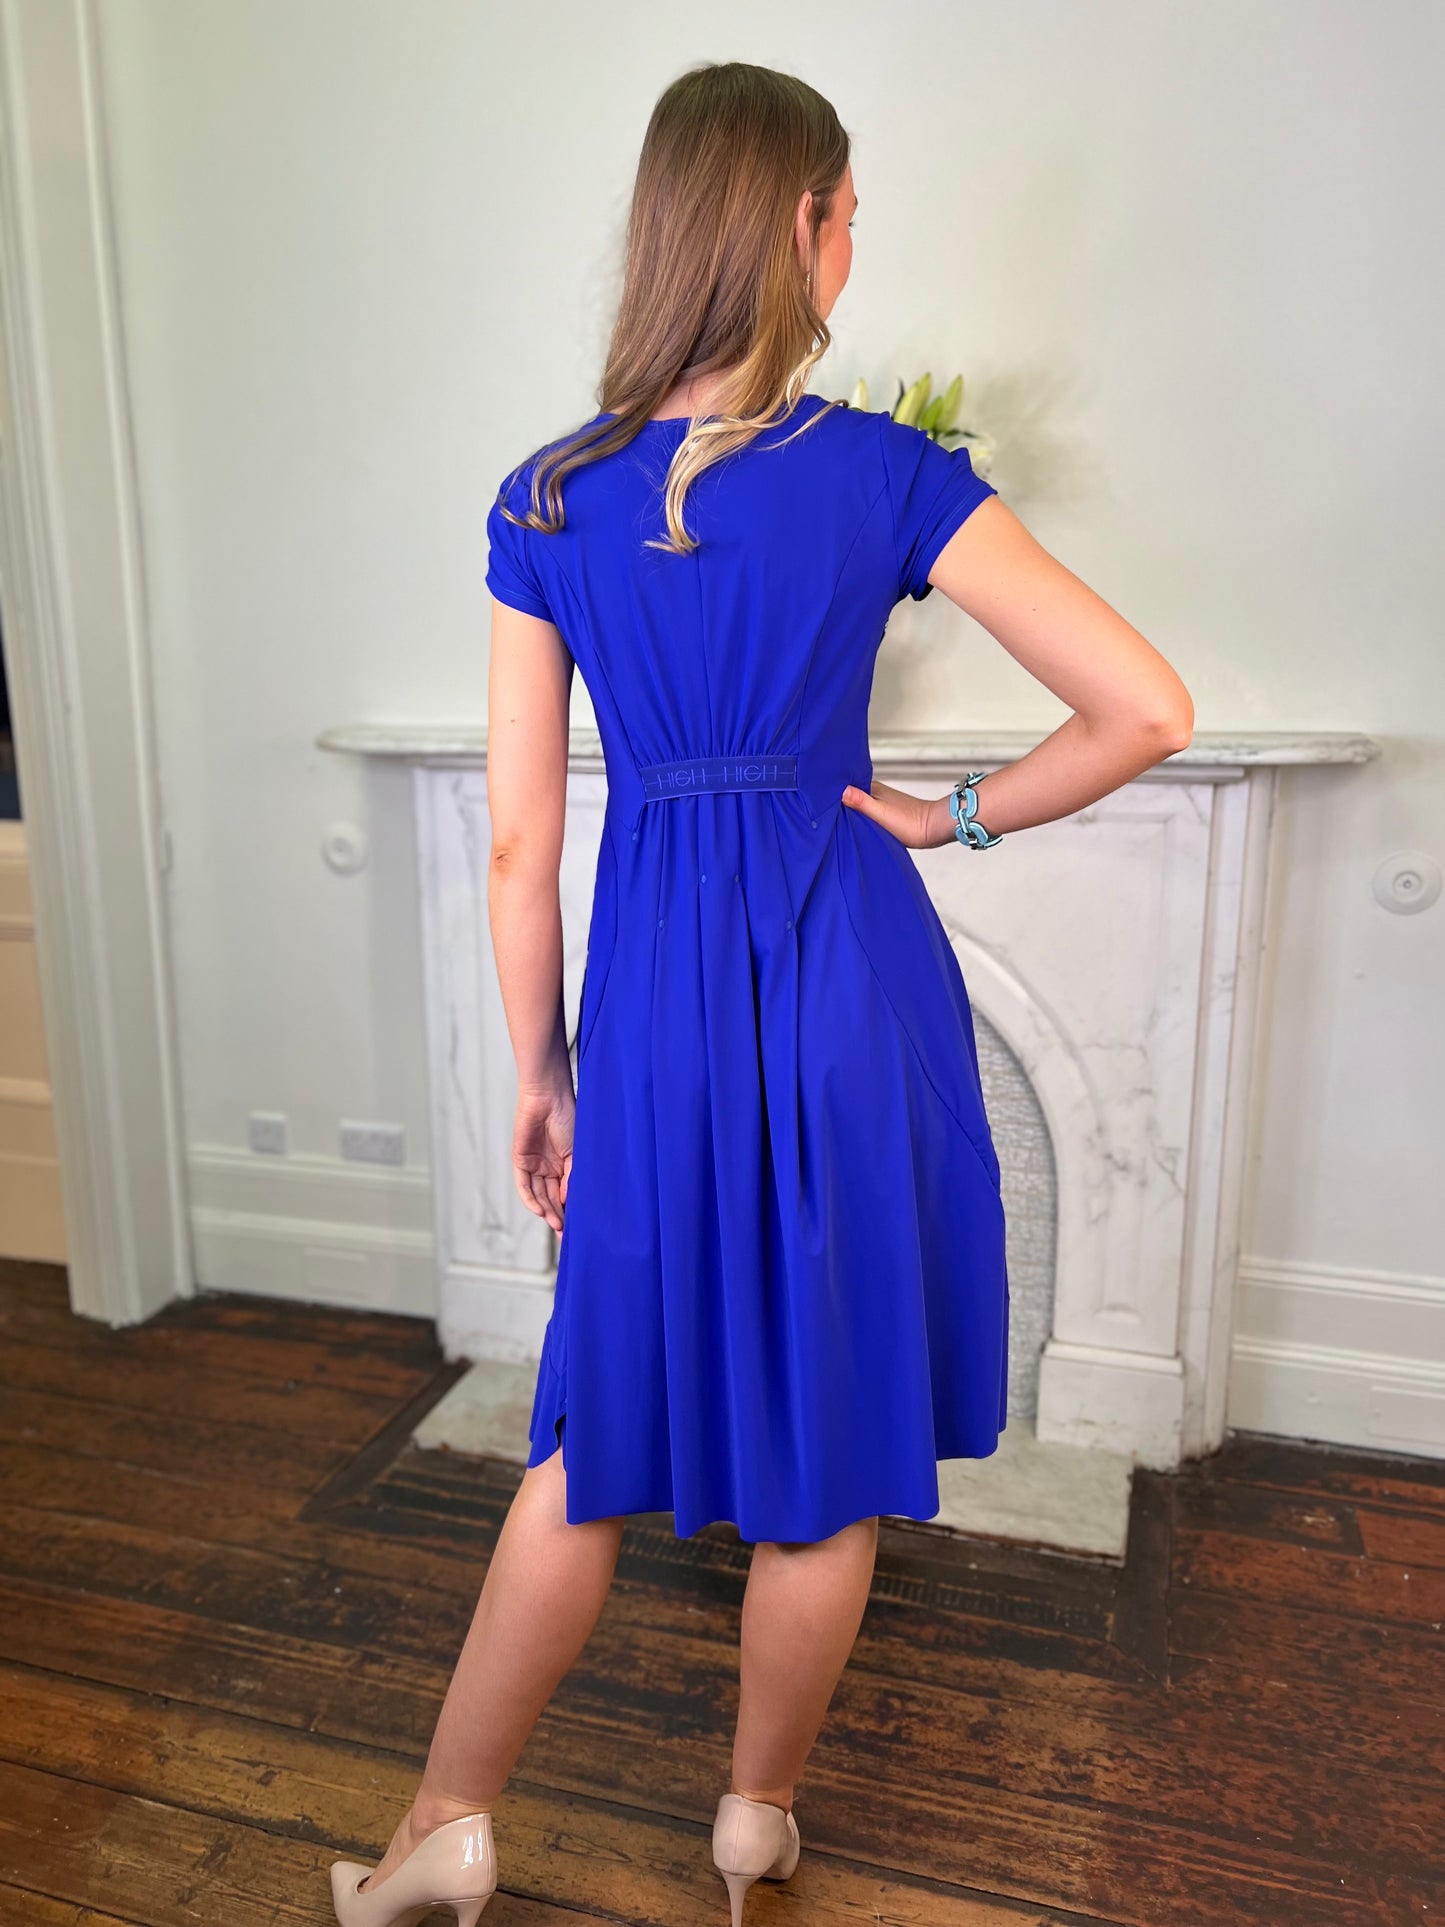 Sublime Royal Blue Dress